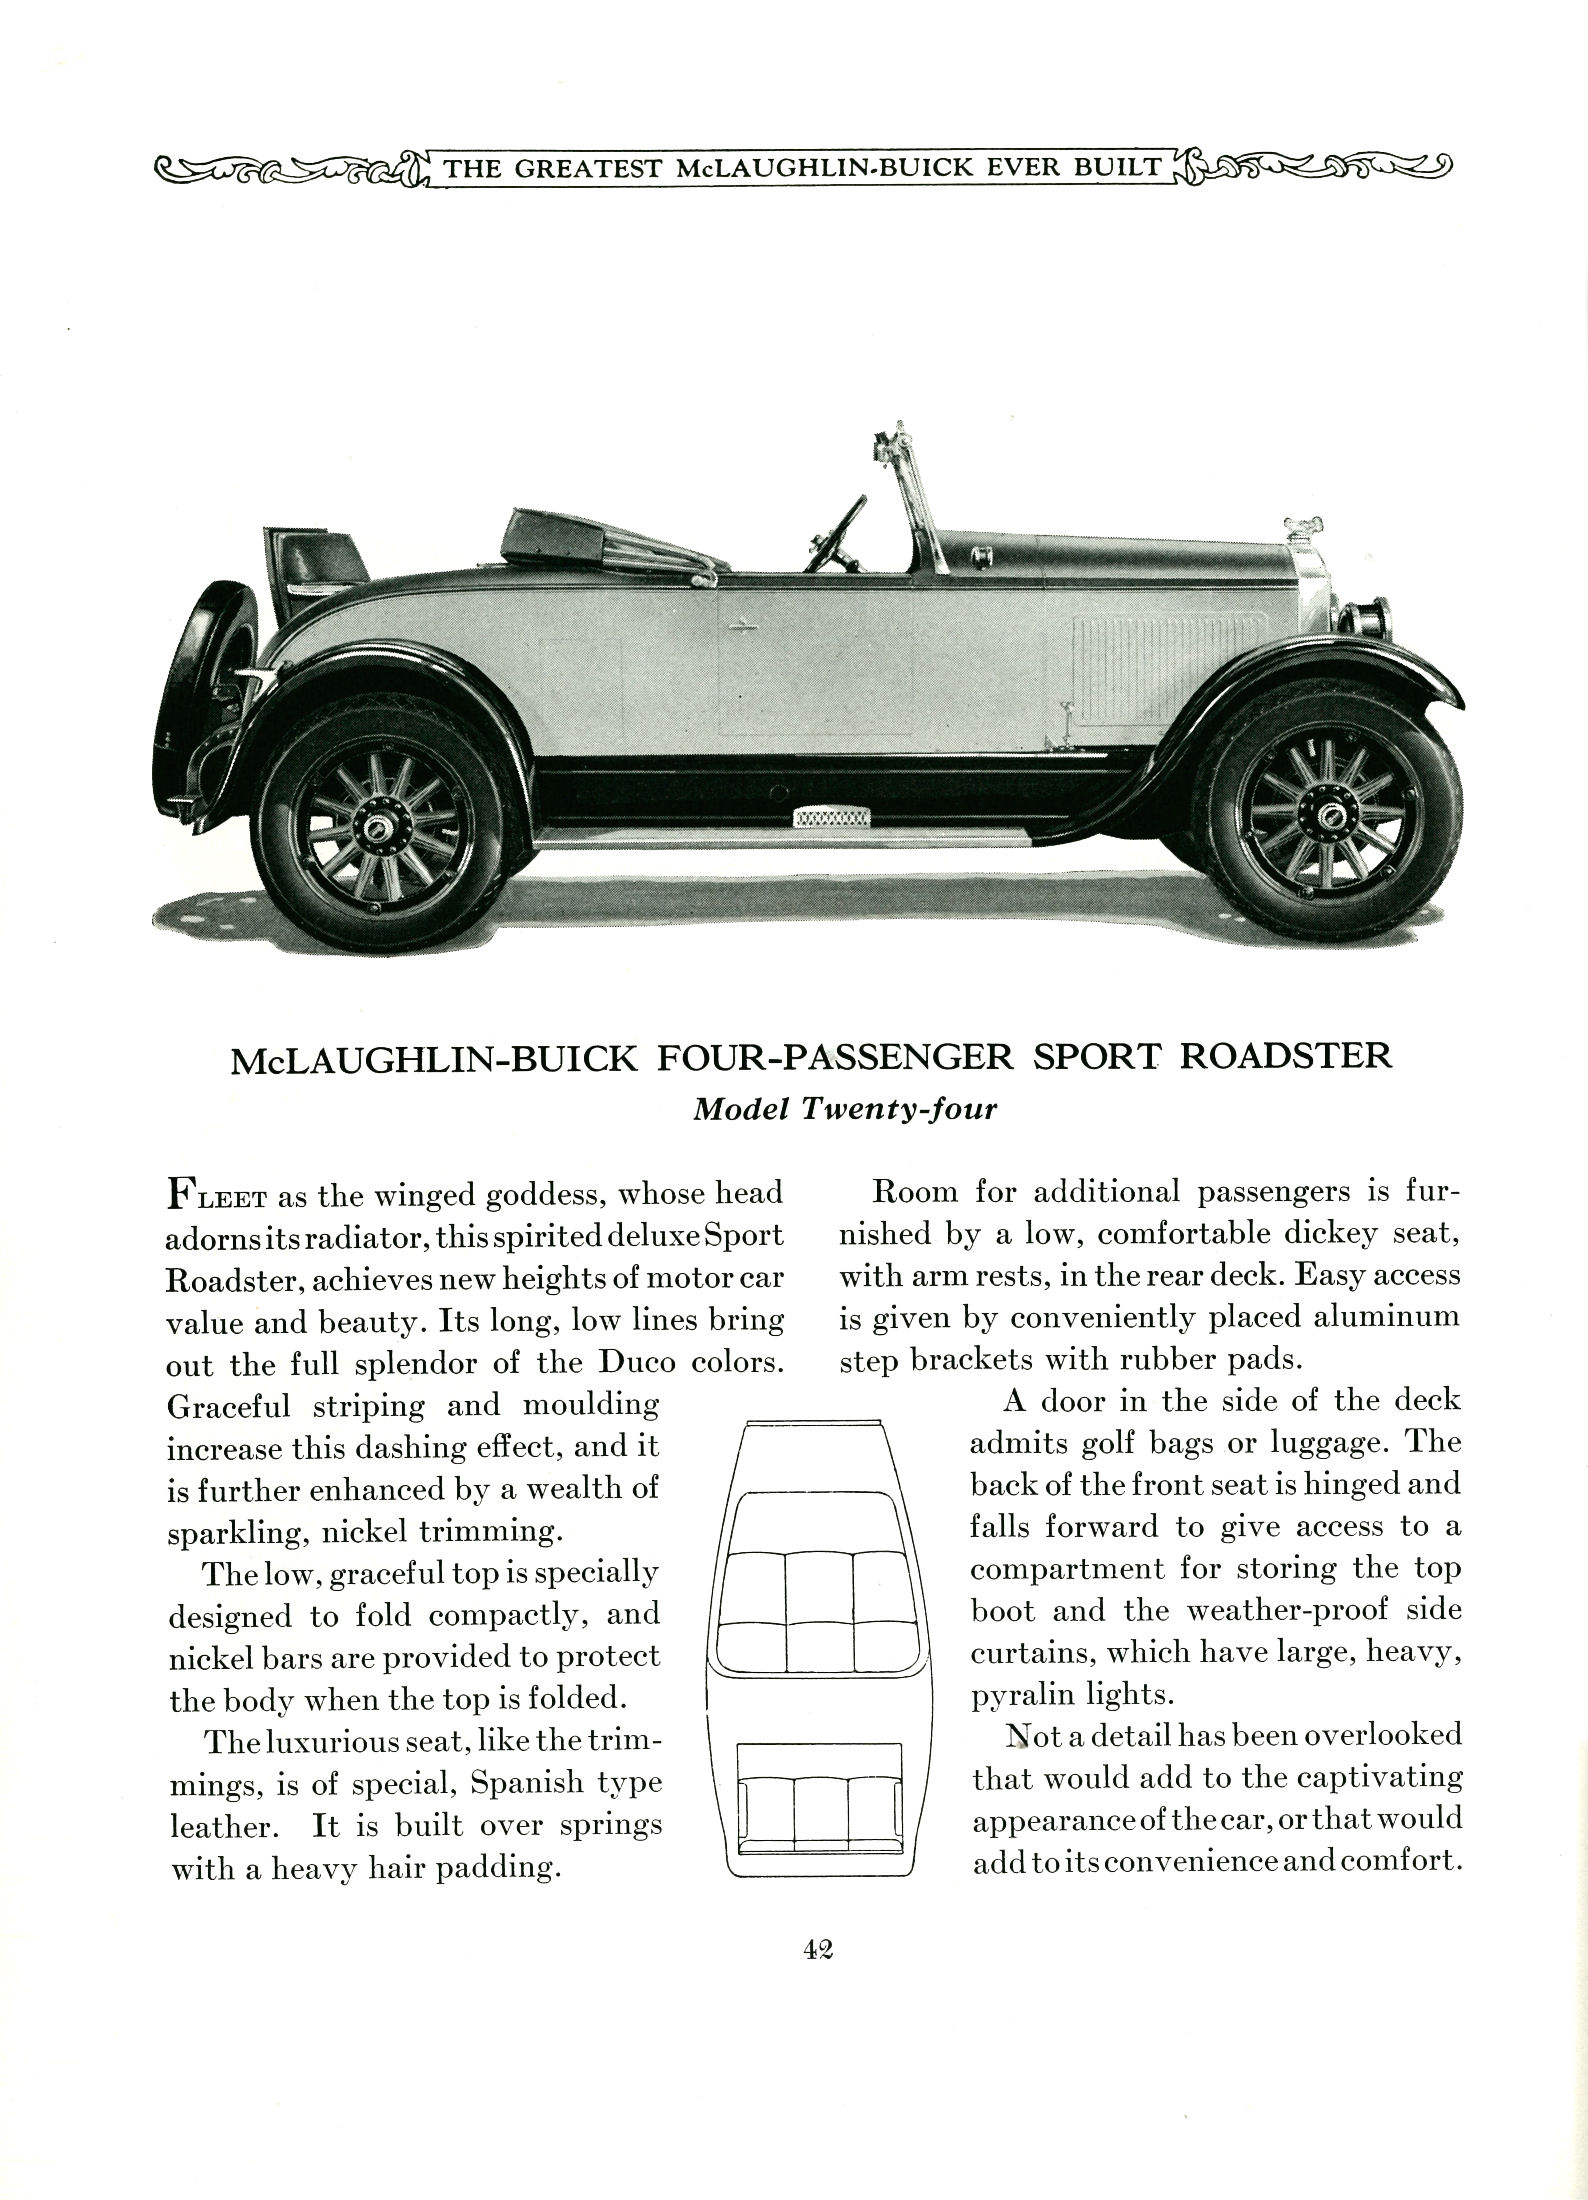 1930 McLaughlin Buick Booklet-42